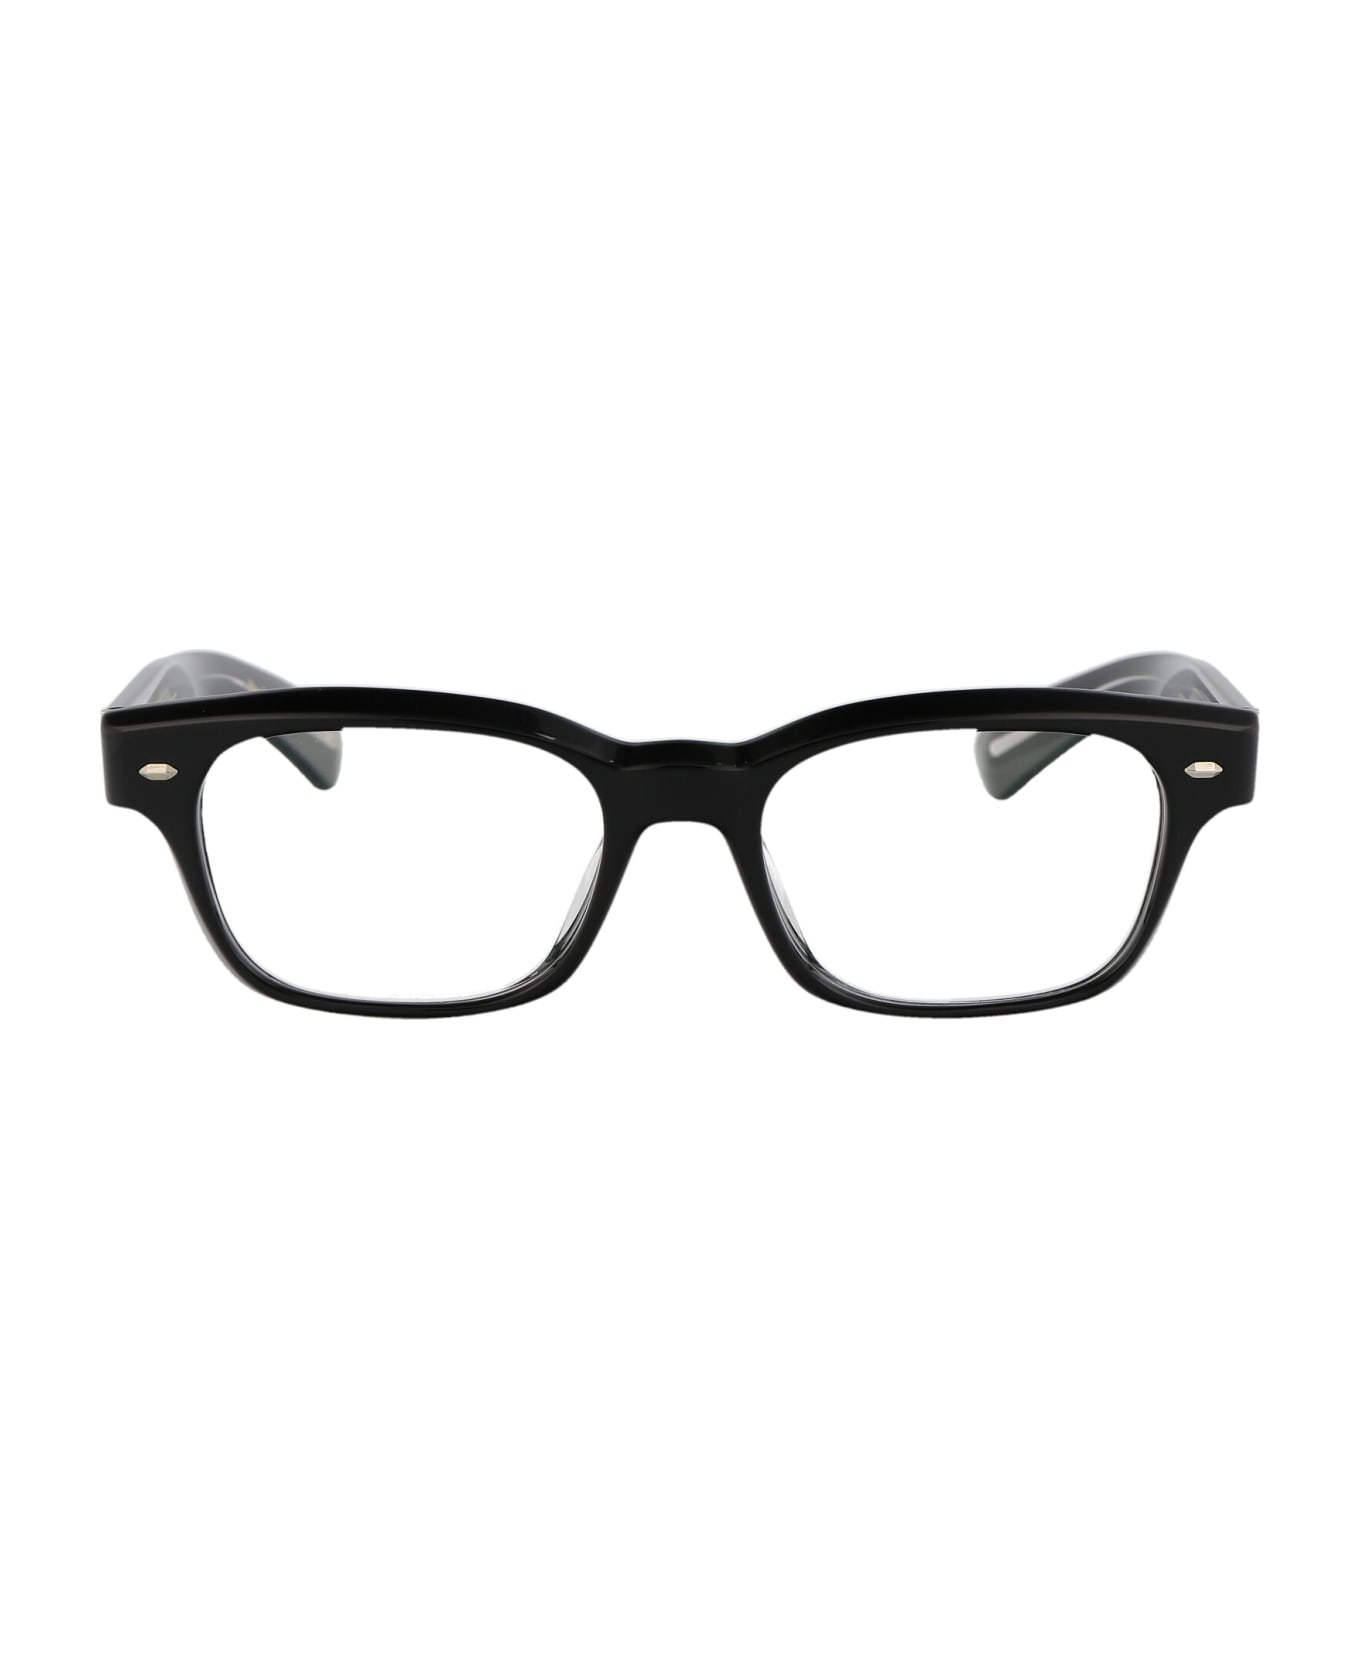 Oliver Peoples Latimore Glasses - 1492 Black